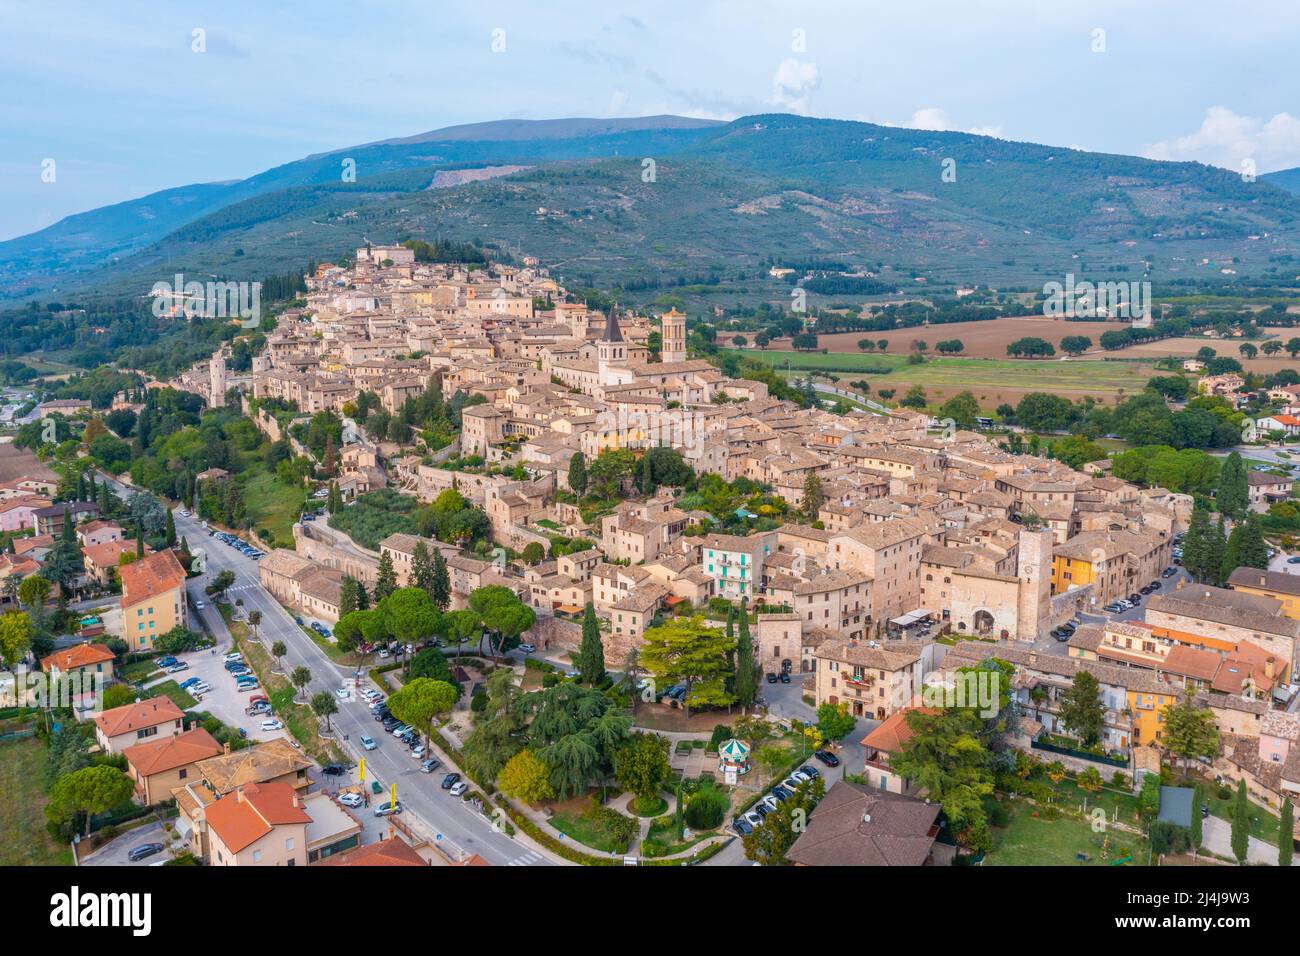 Aerial view of Italian town Spello Stock Photo - Alamy